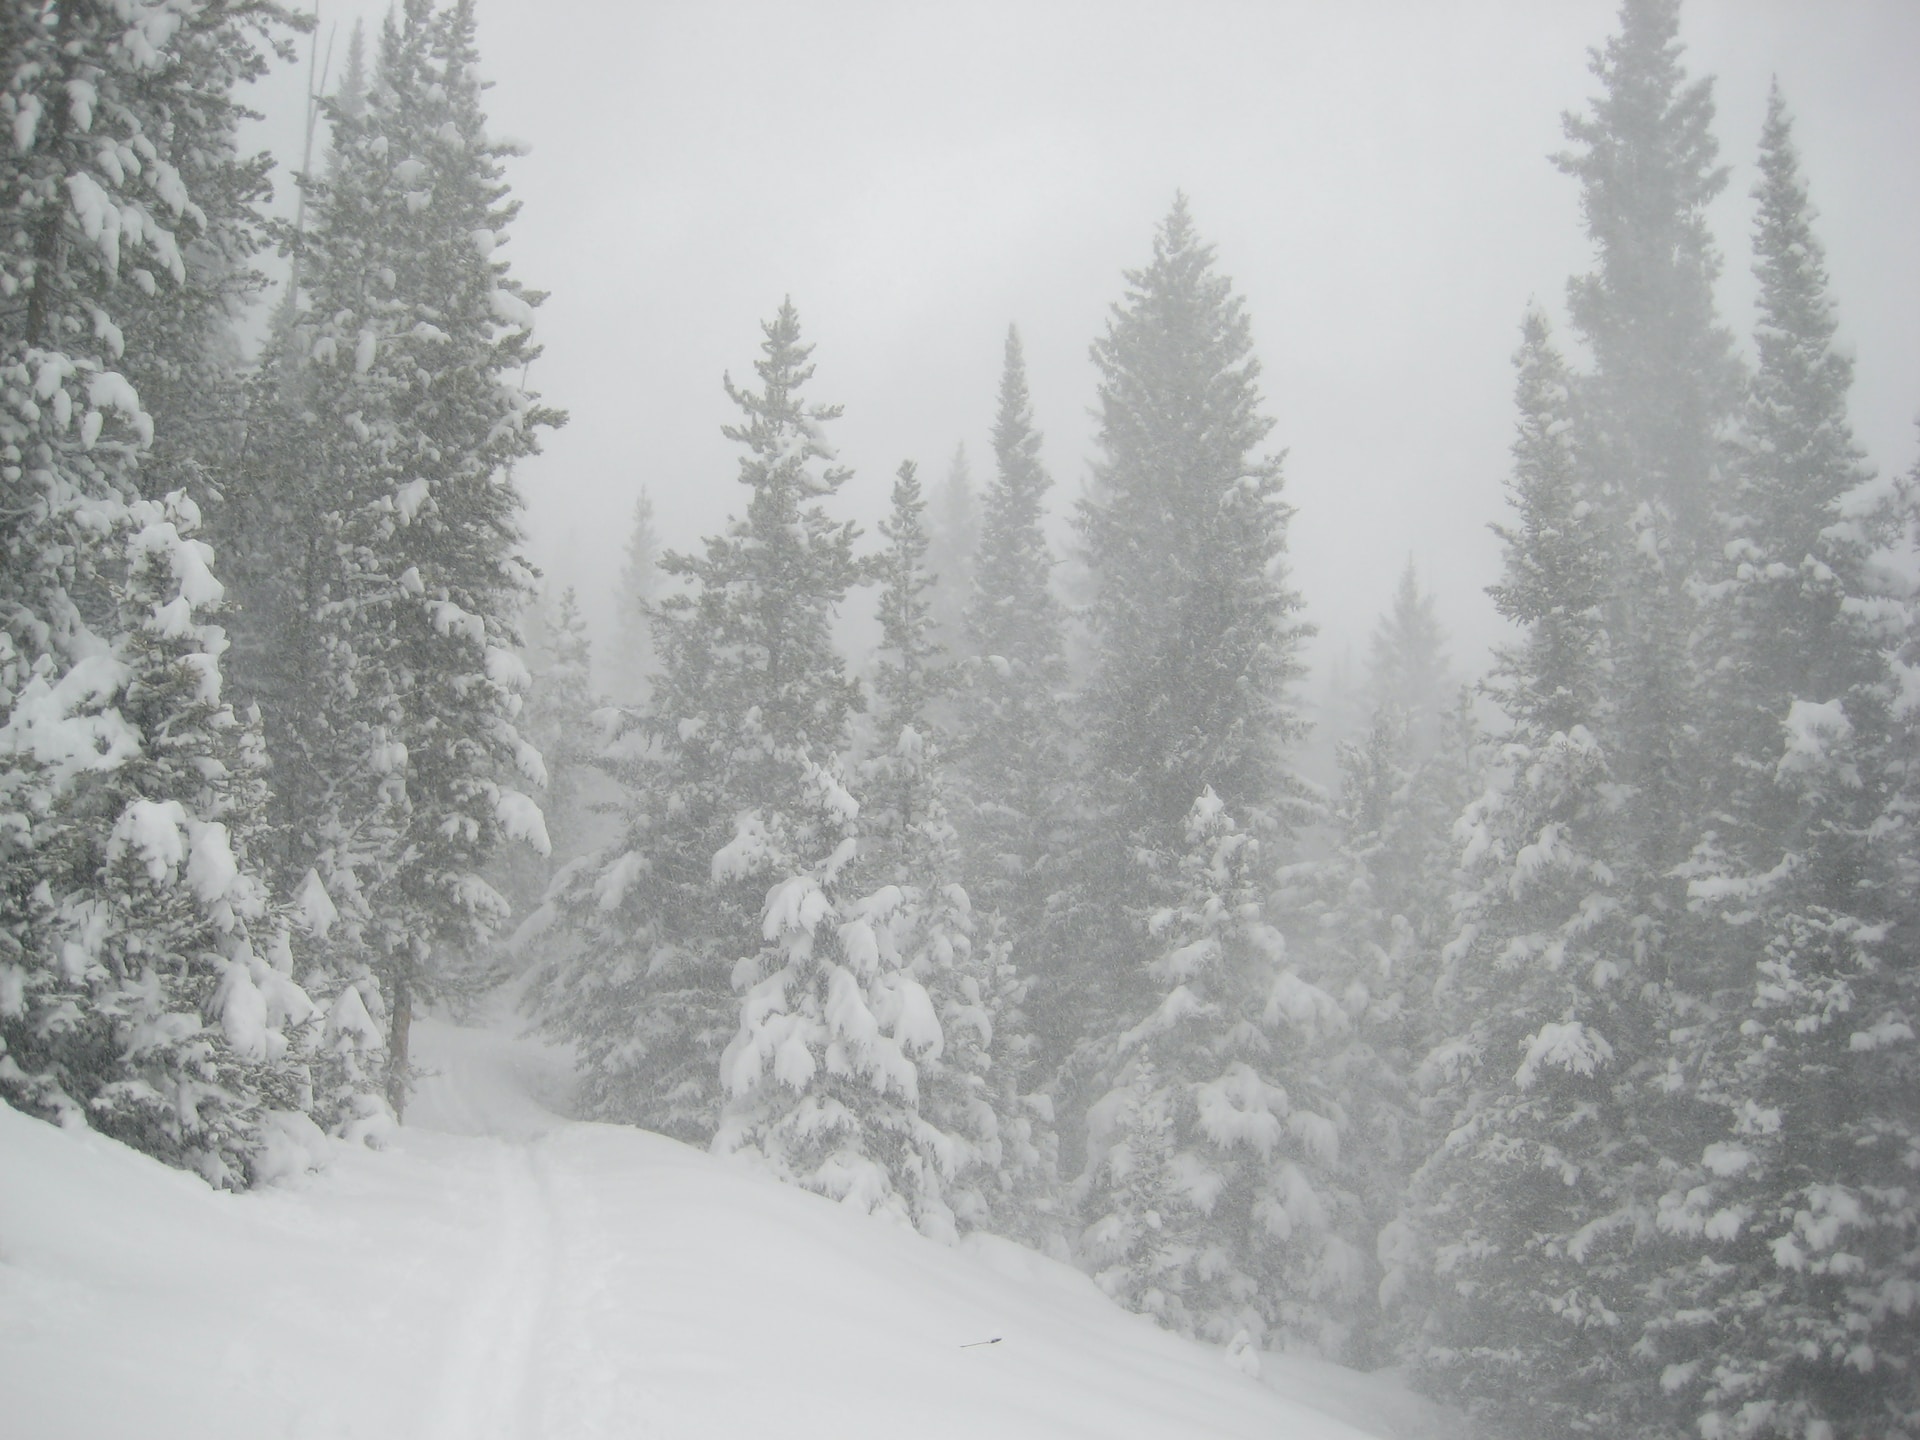 Snowy woods in Montana